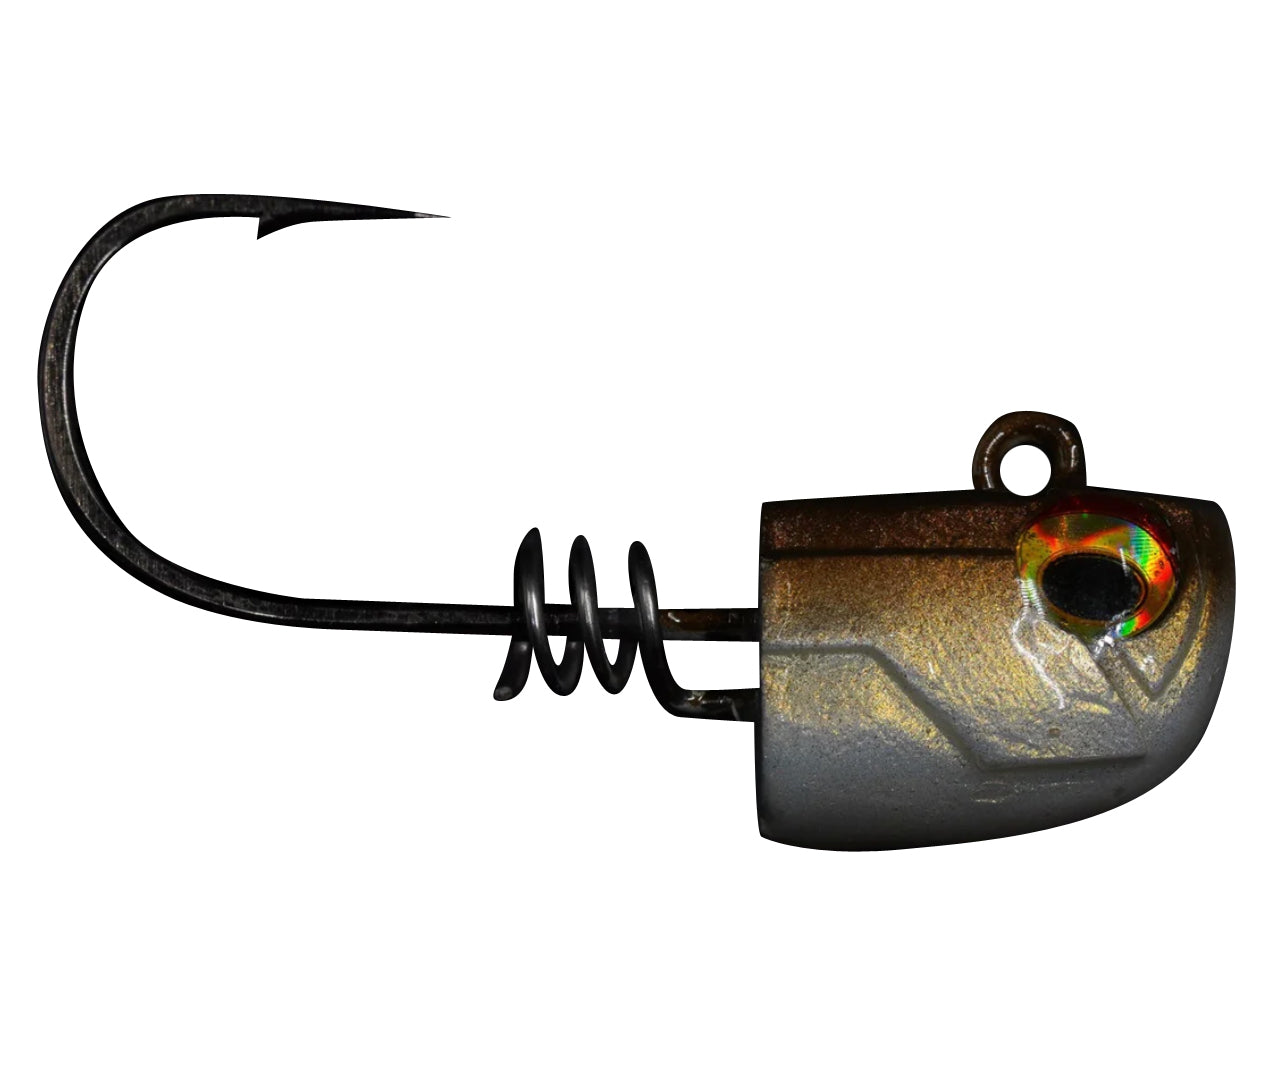 Premium fishing Jig Heads for 3 bait - No Live Bait Needed $5.99